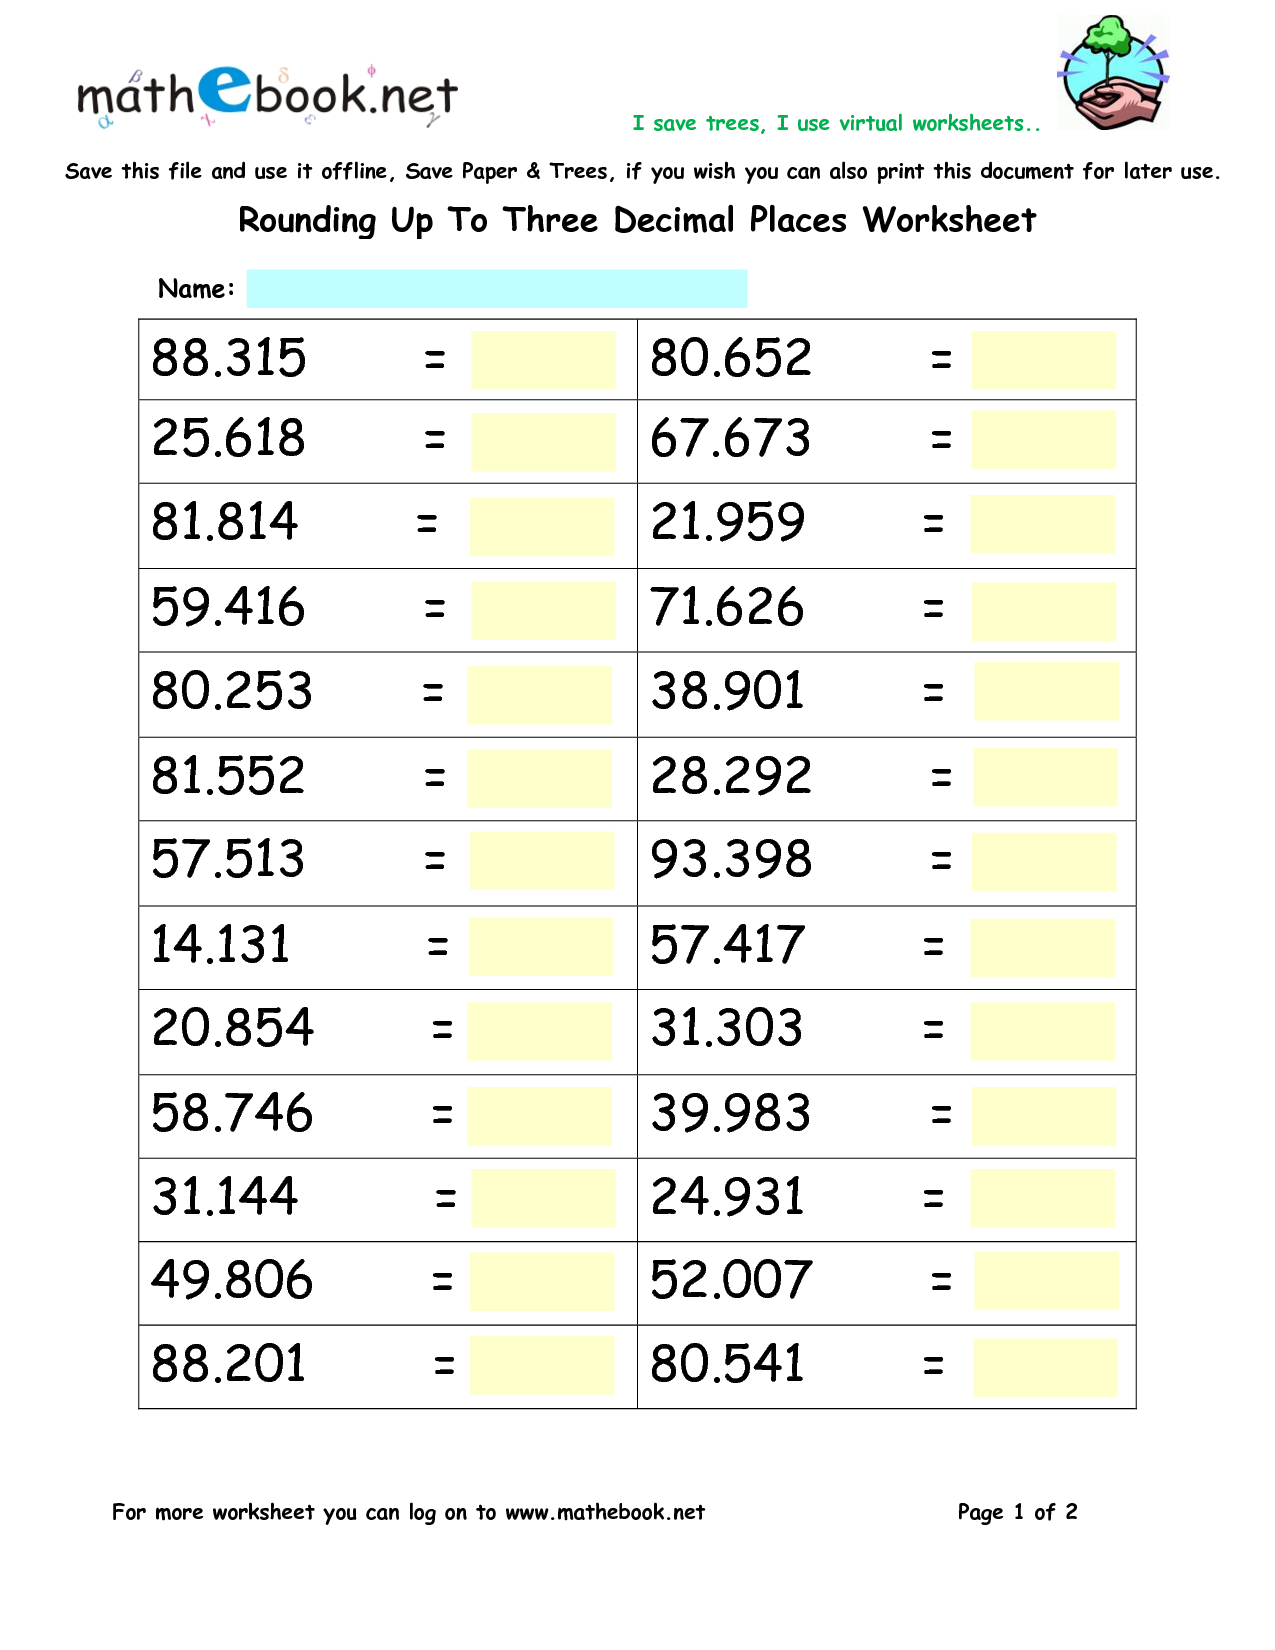 math-worksheets-rounding-decimals-831198-free-worksheets-10-best-images-of-rounding-decimals